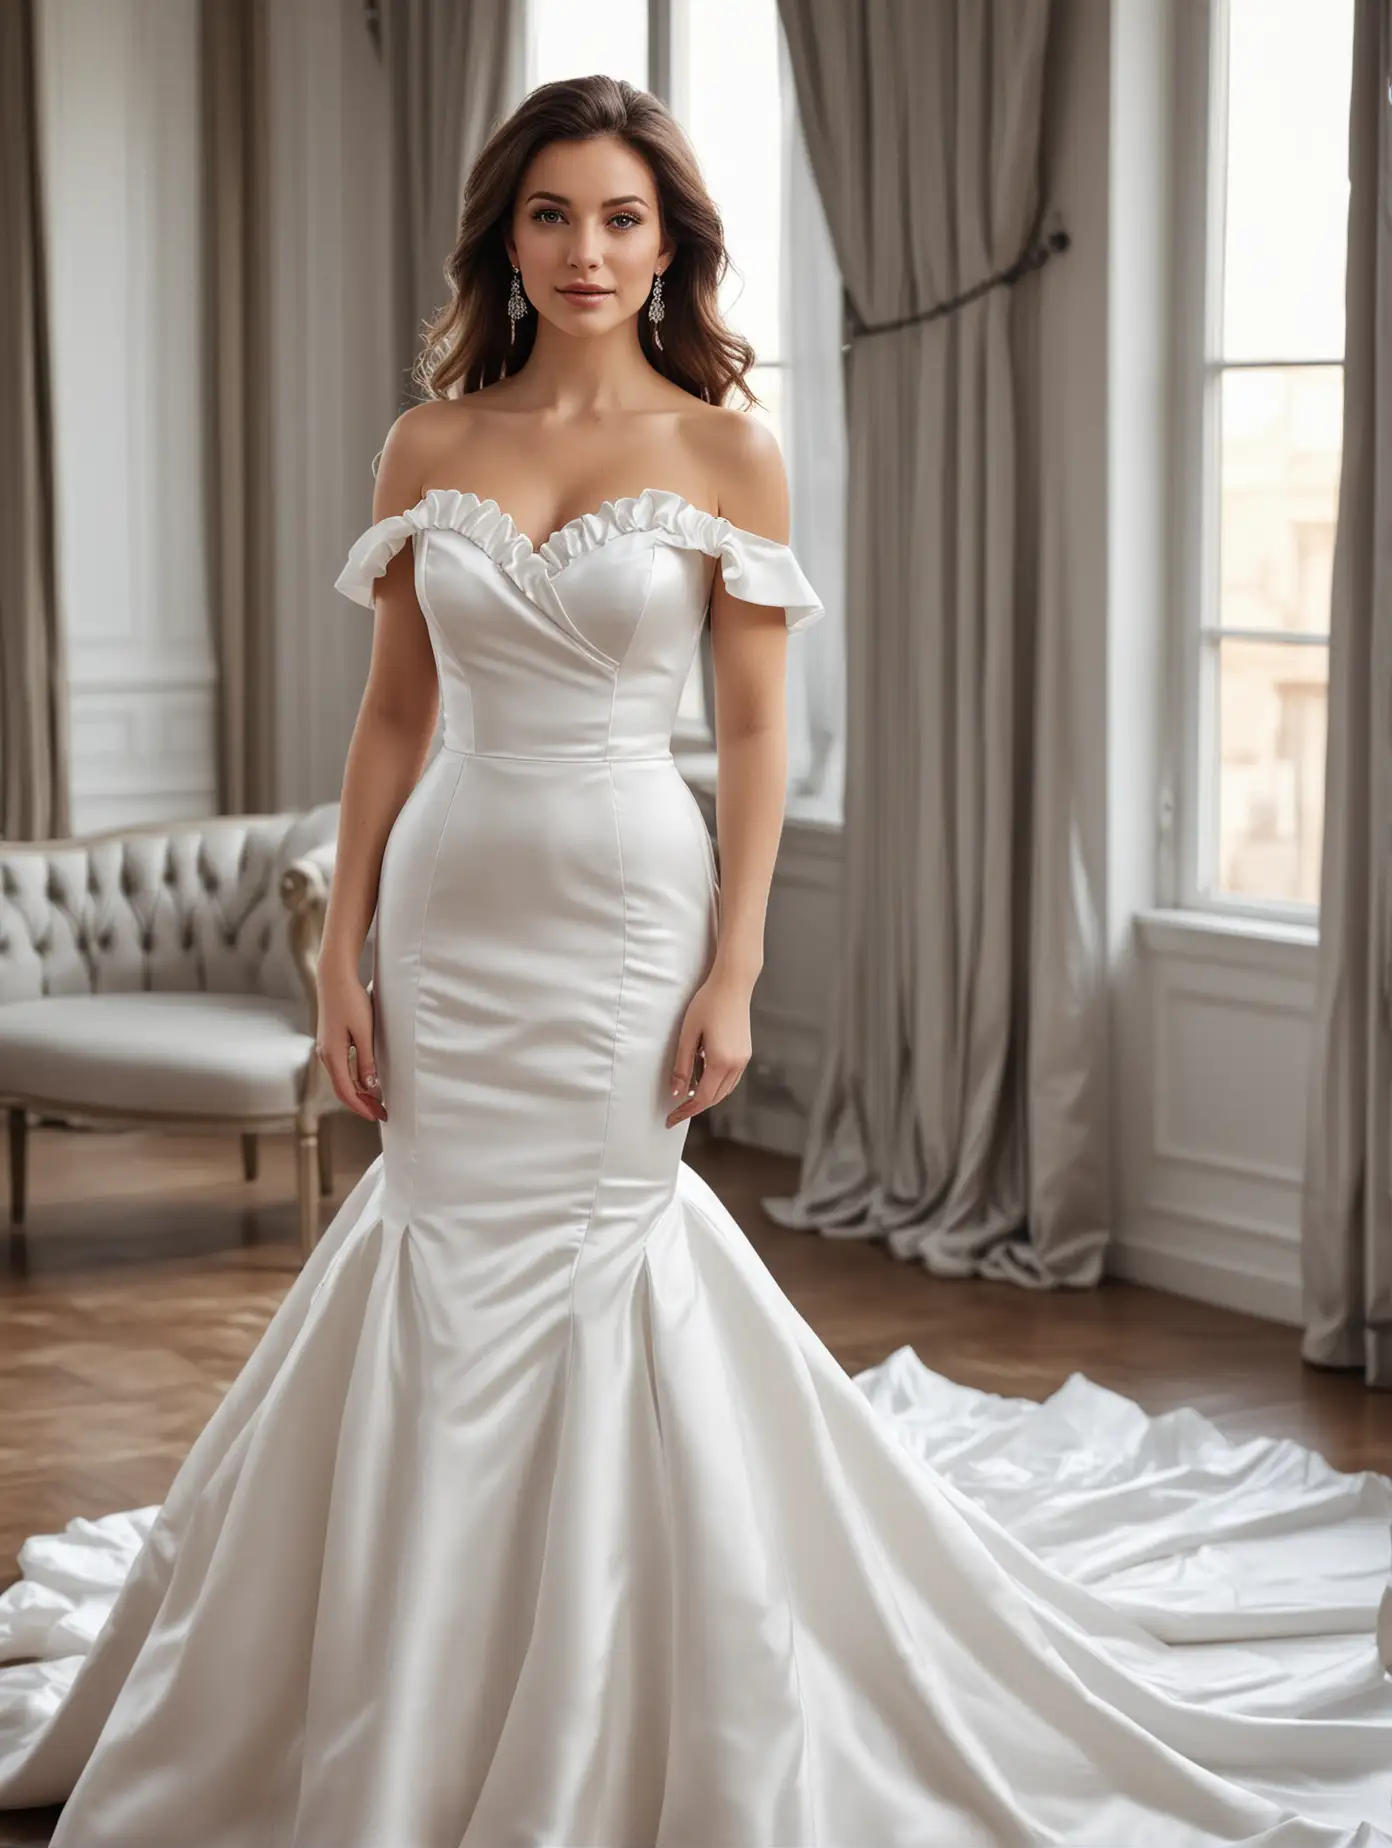 Charming Caucasian Woman in Elegant OffShoulder Satin Wedding Dress